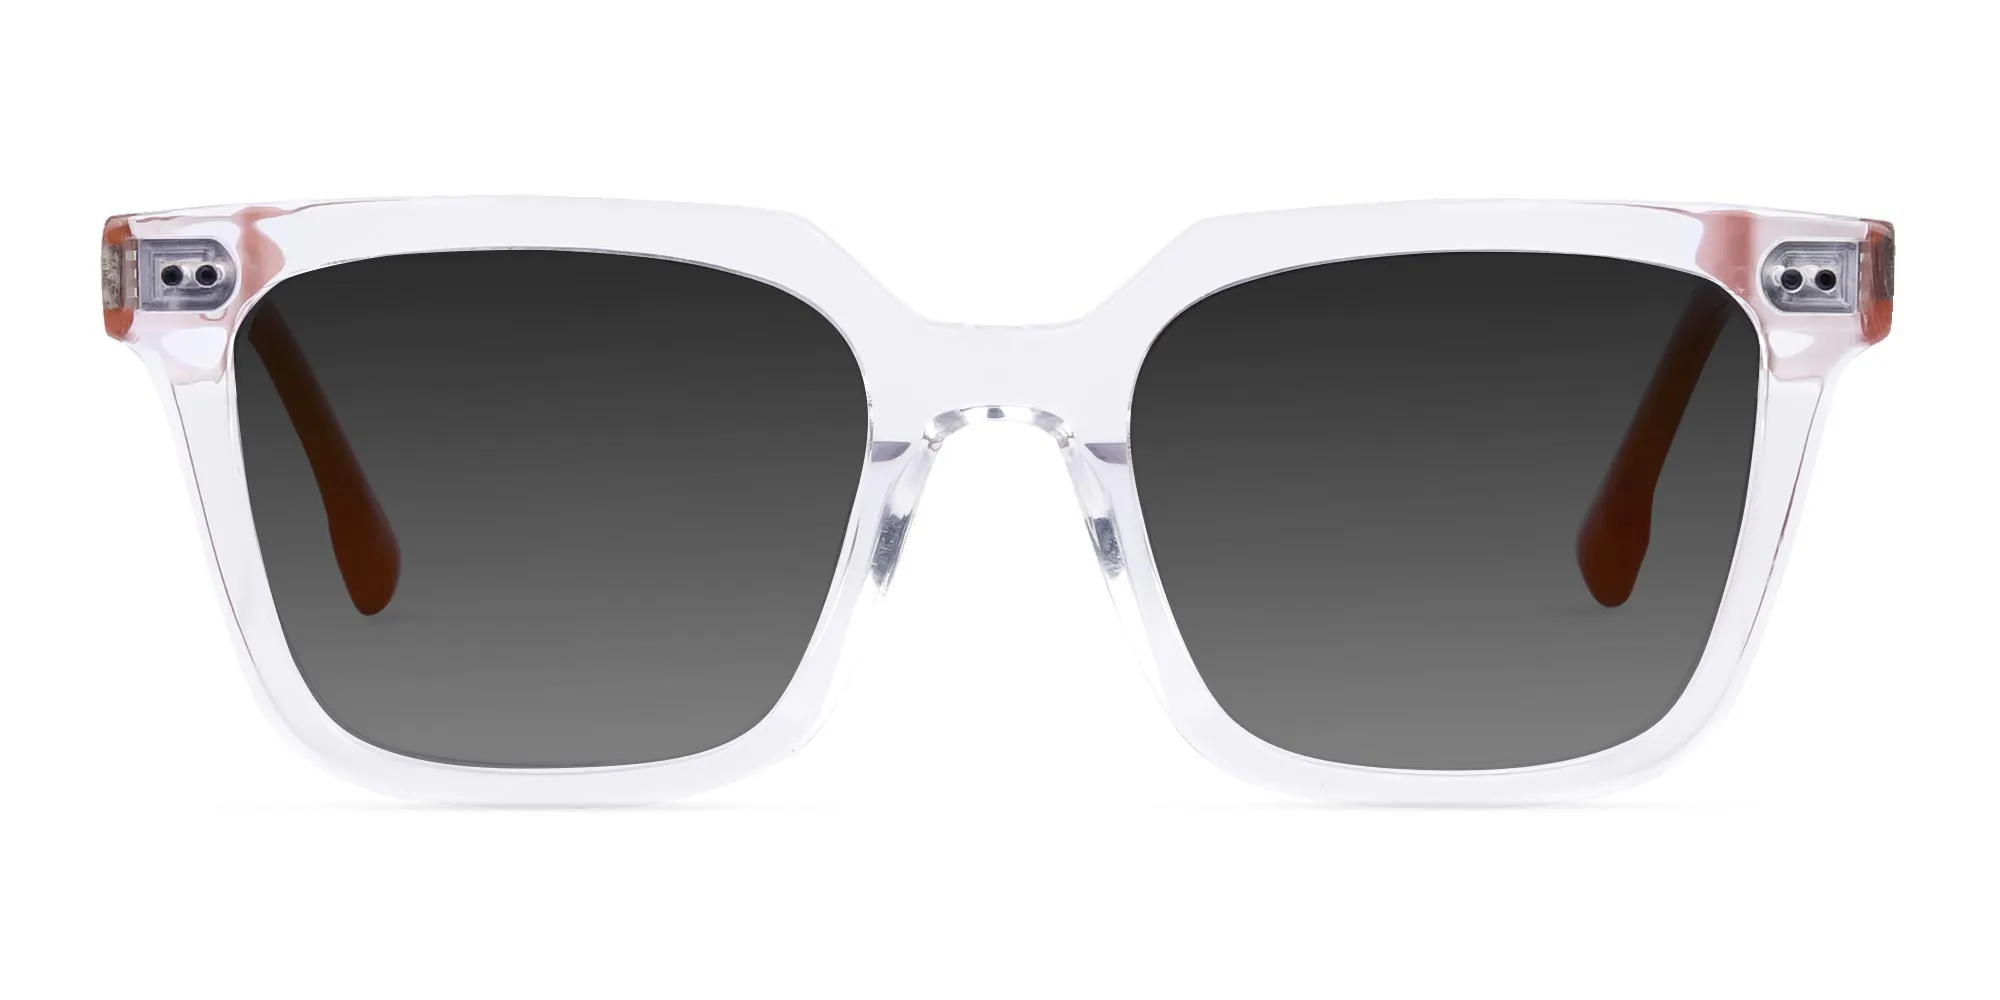 Clear-Wayfarer-Sunglasses-with-Grey-Tint-2